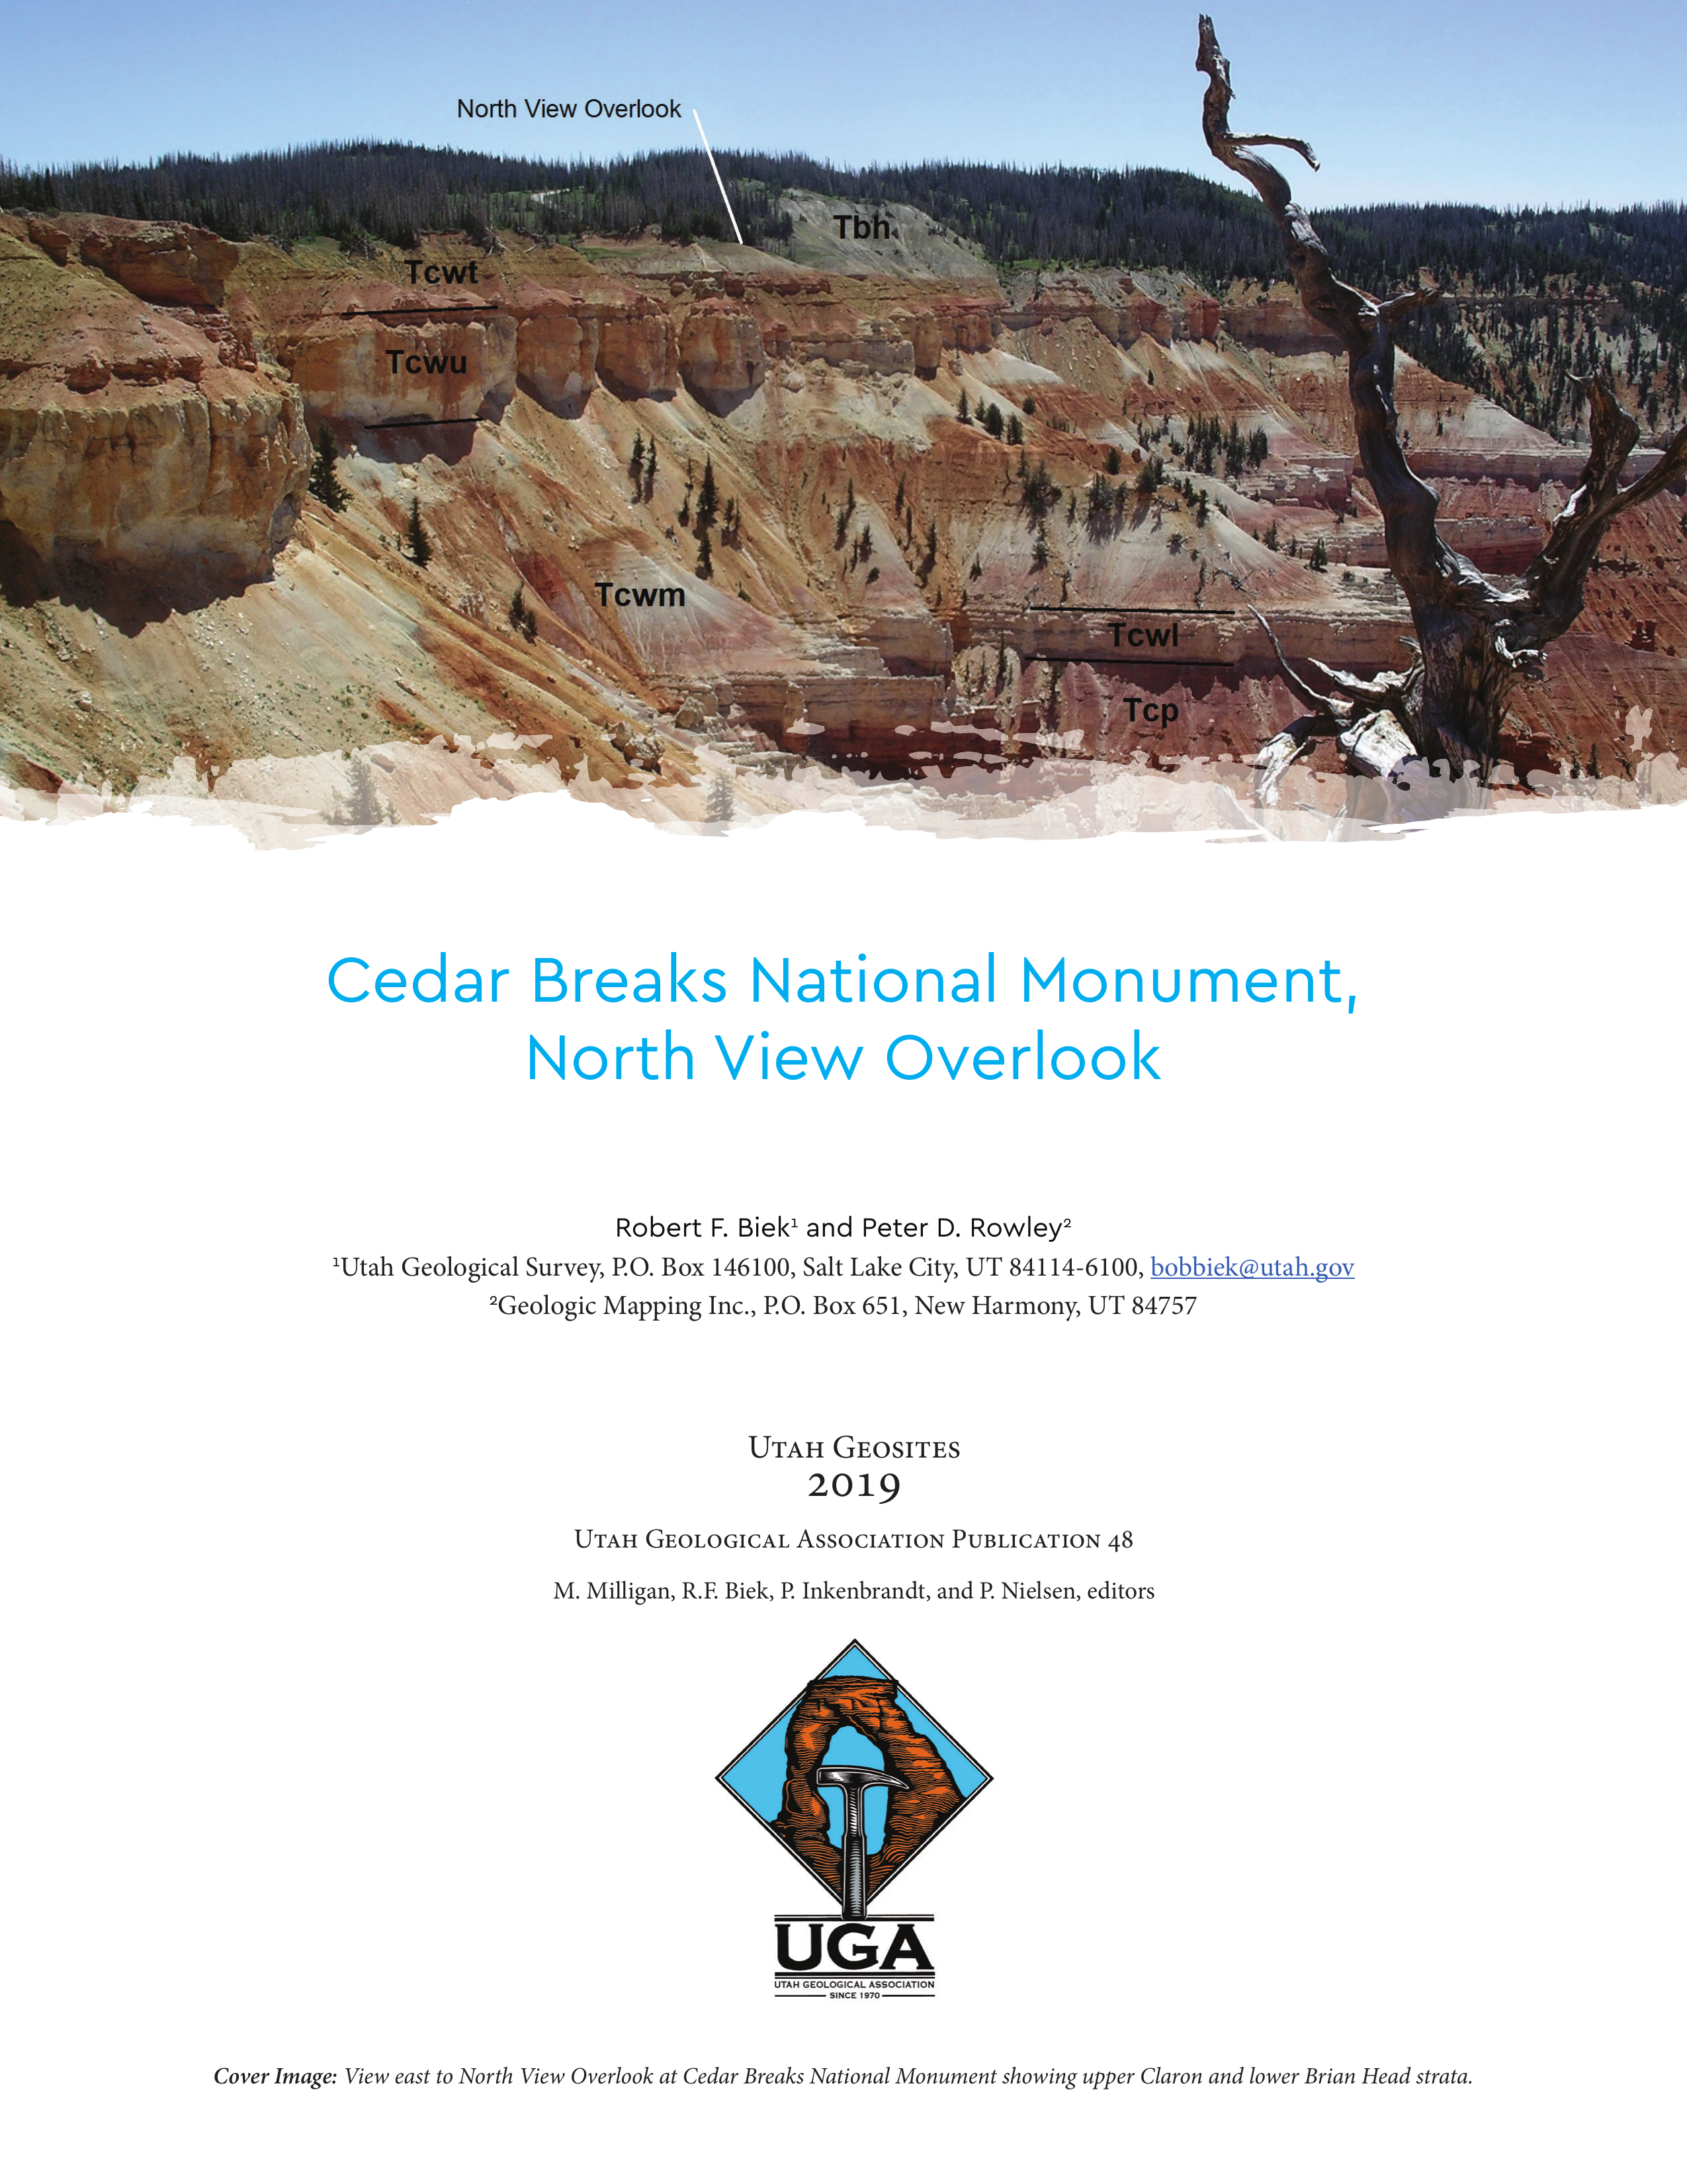 Cedar Breaks view of the Claron Formation